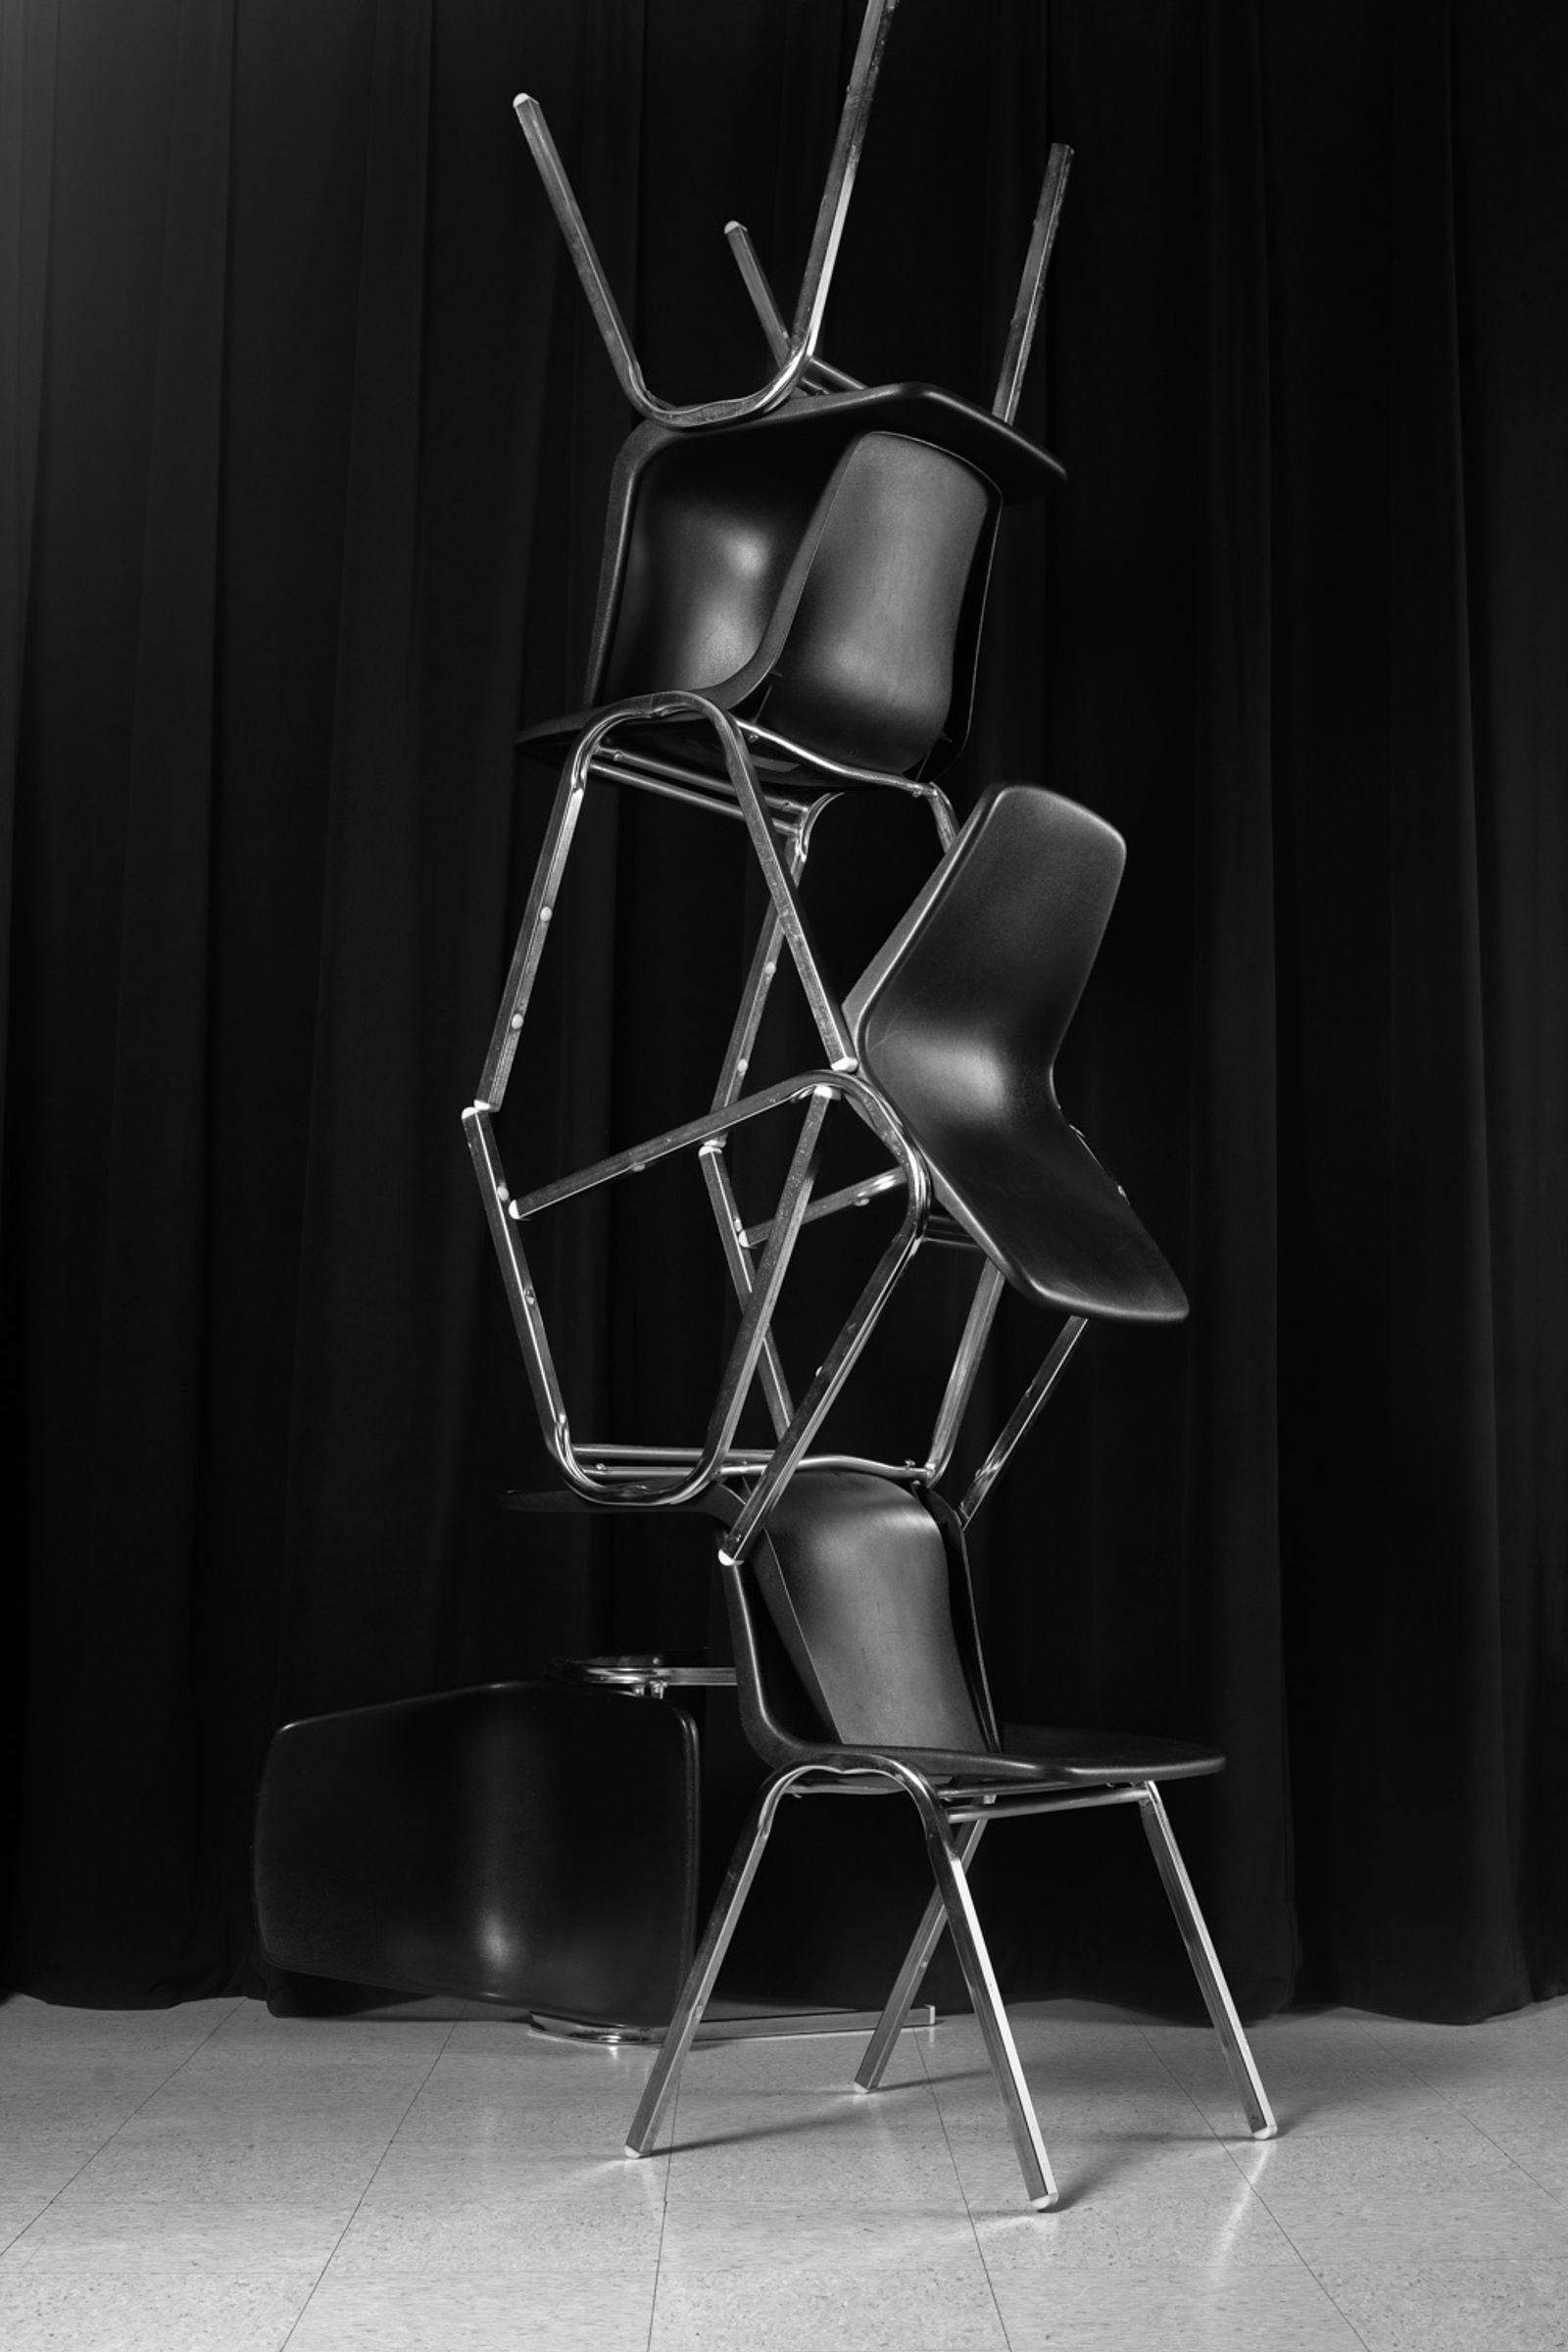 © Su Ji Lee - Untitled (Chair Pyramid), 2021, 11x16.5 inches, Archival pigment print